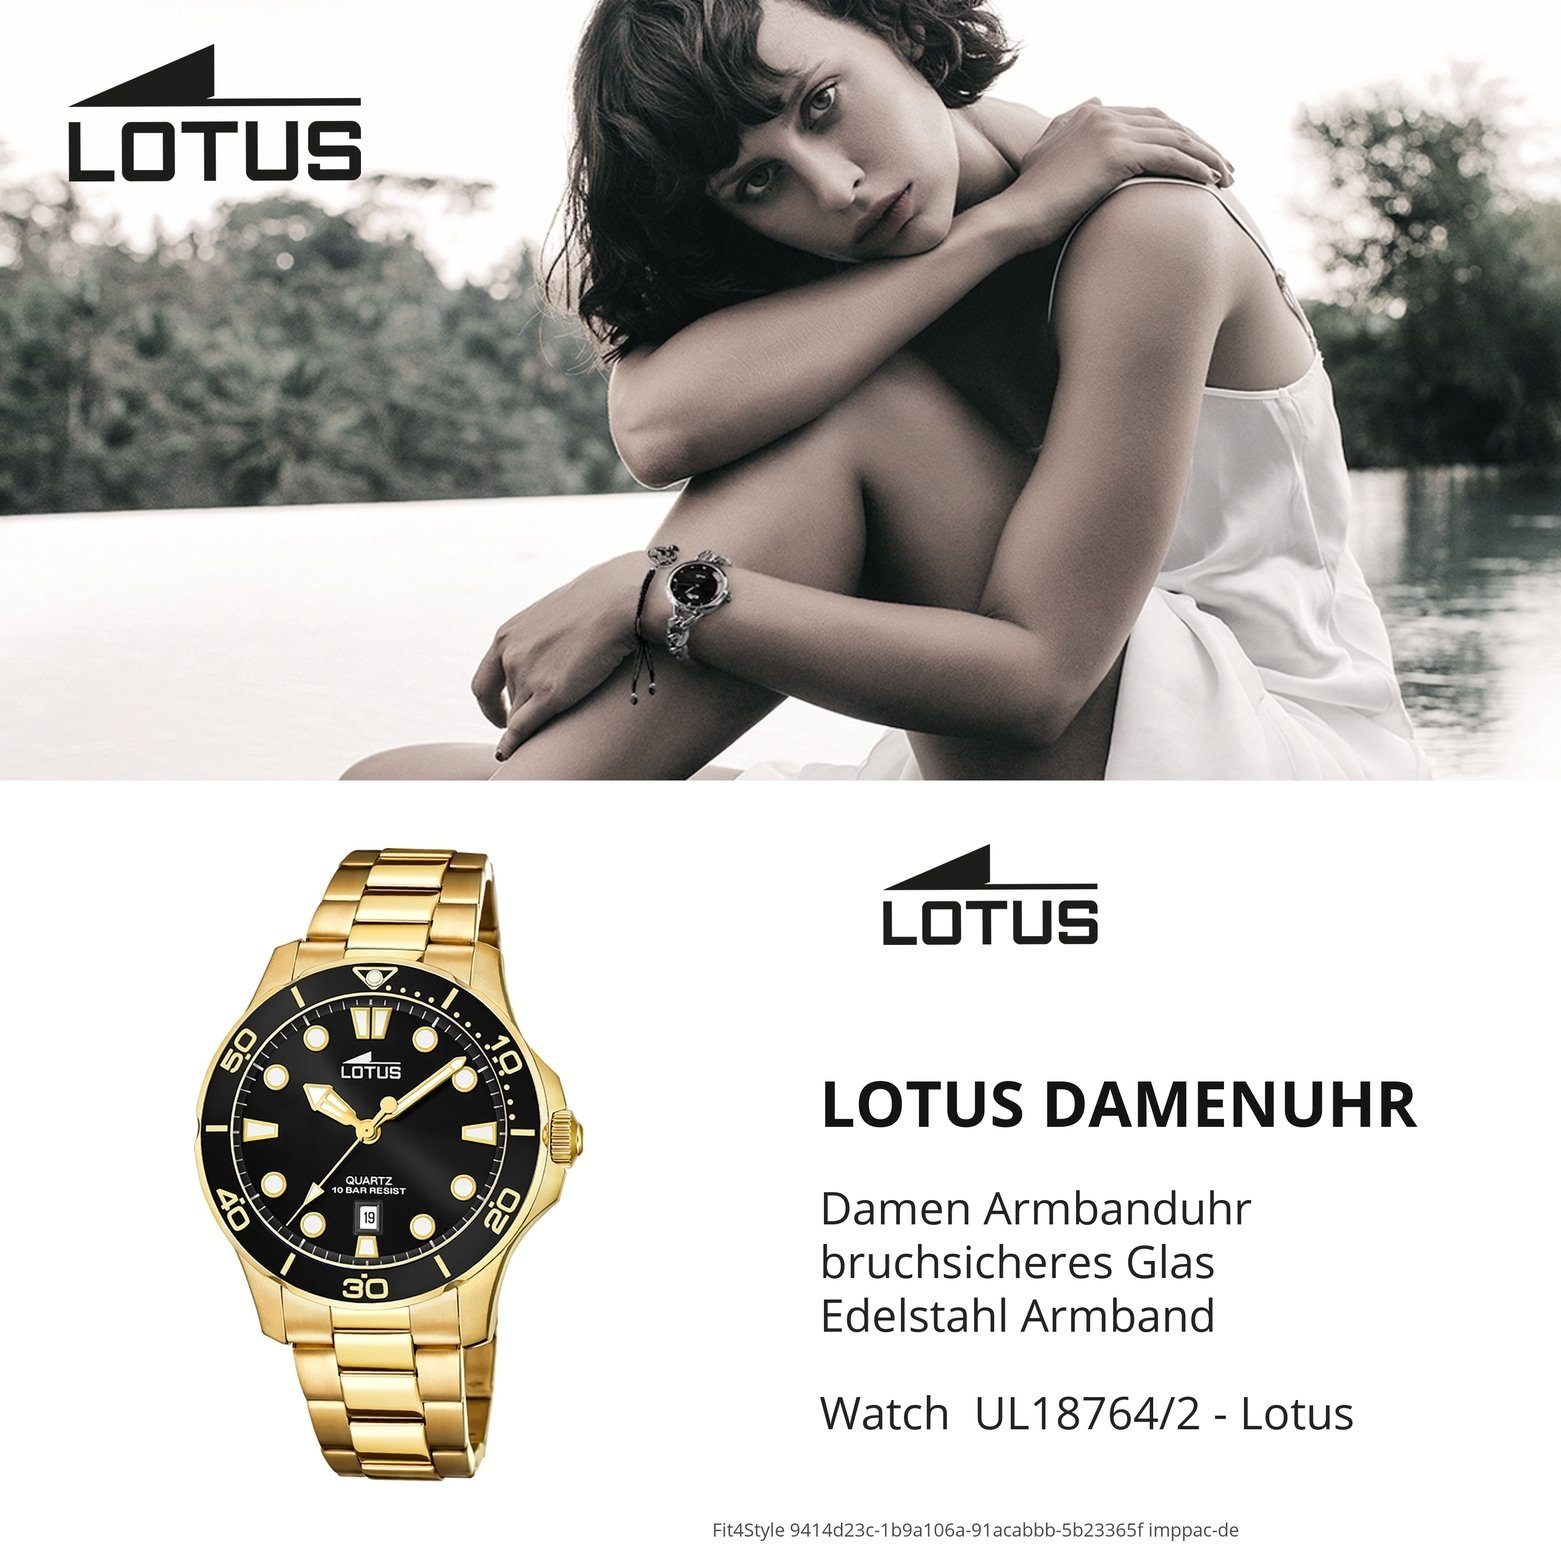 Lotus mittel rund, 39mm) Damenuhr Sport Armbanduhr Damen 18764/2, Edelstahlarmband Lotus (ca. gold Quarzuhr